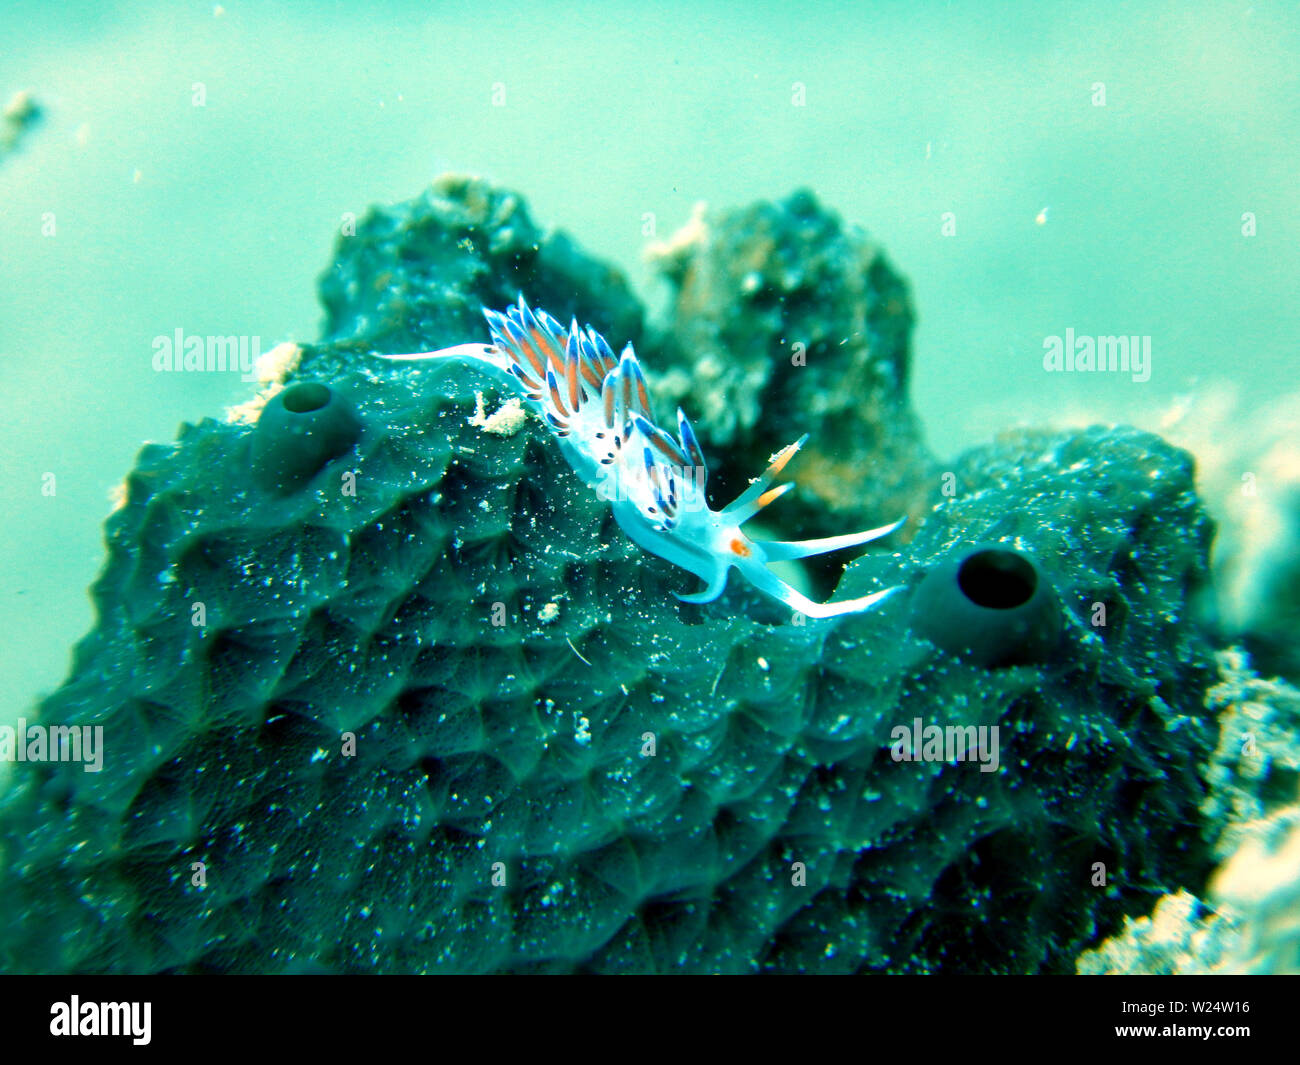 Black Sponge, Ircinia muscarum, Kas, Antalya, Mediterranean Sea, Turkey  Stock Photo - Alamy